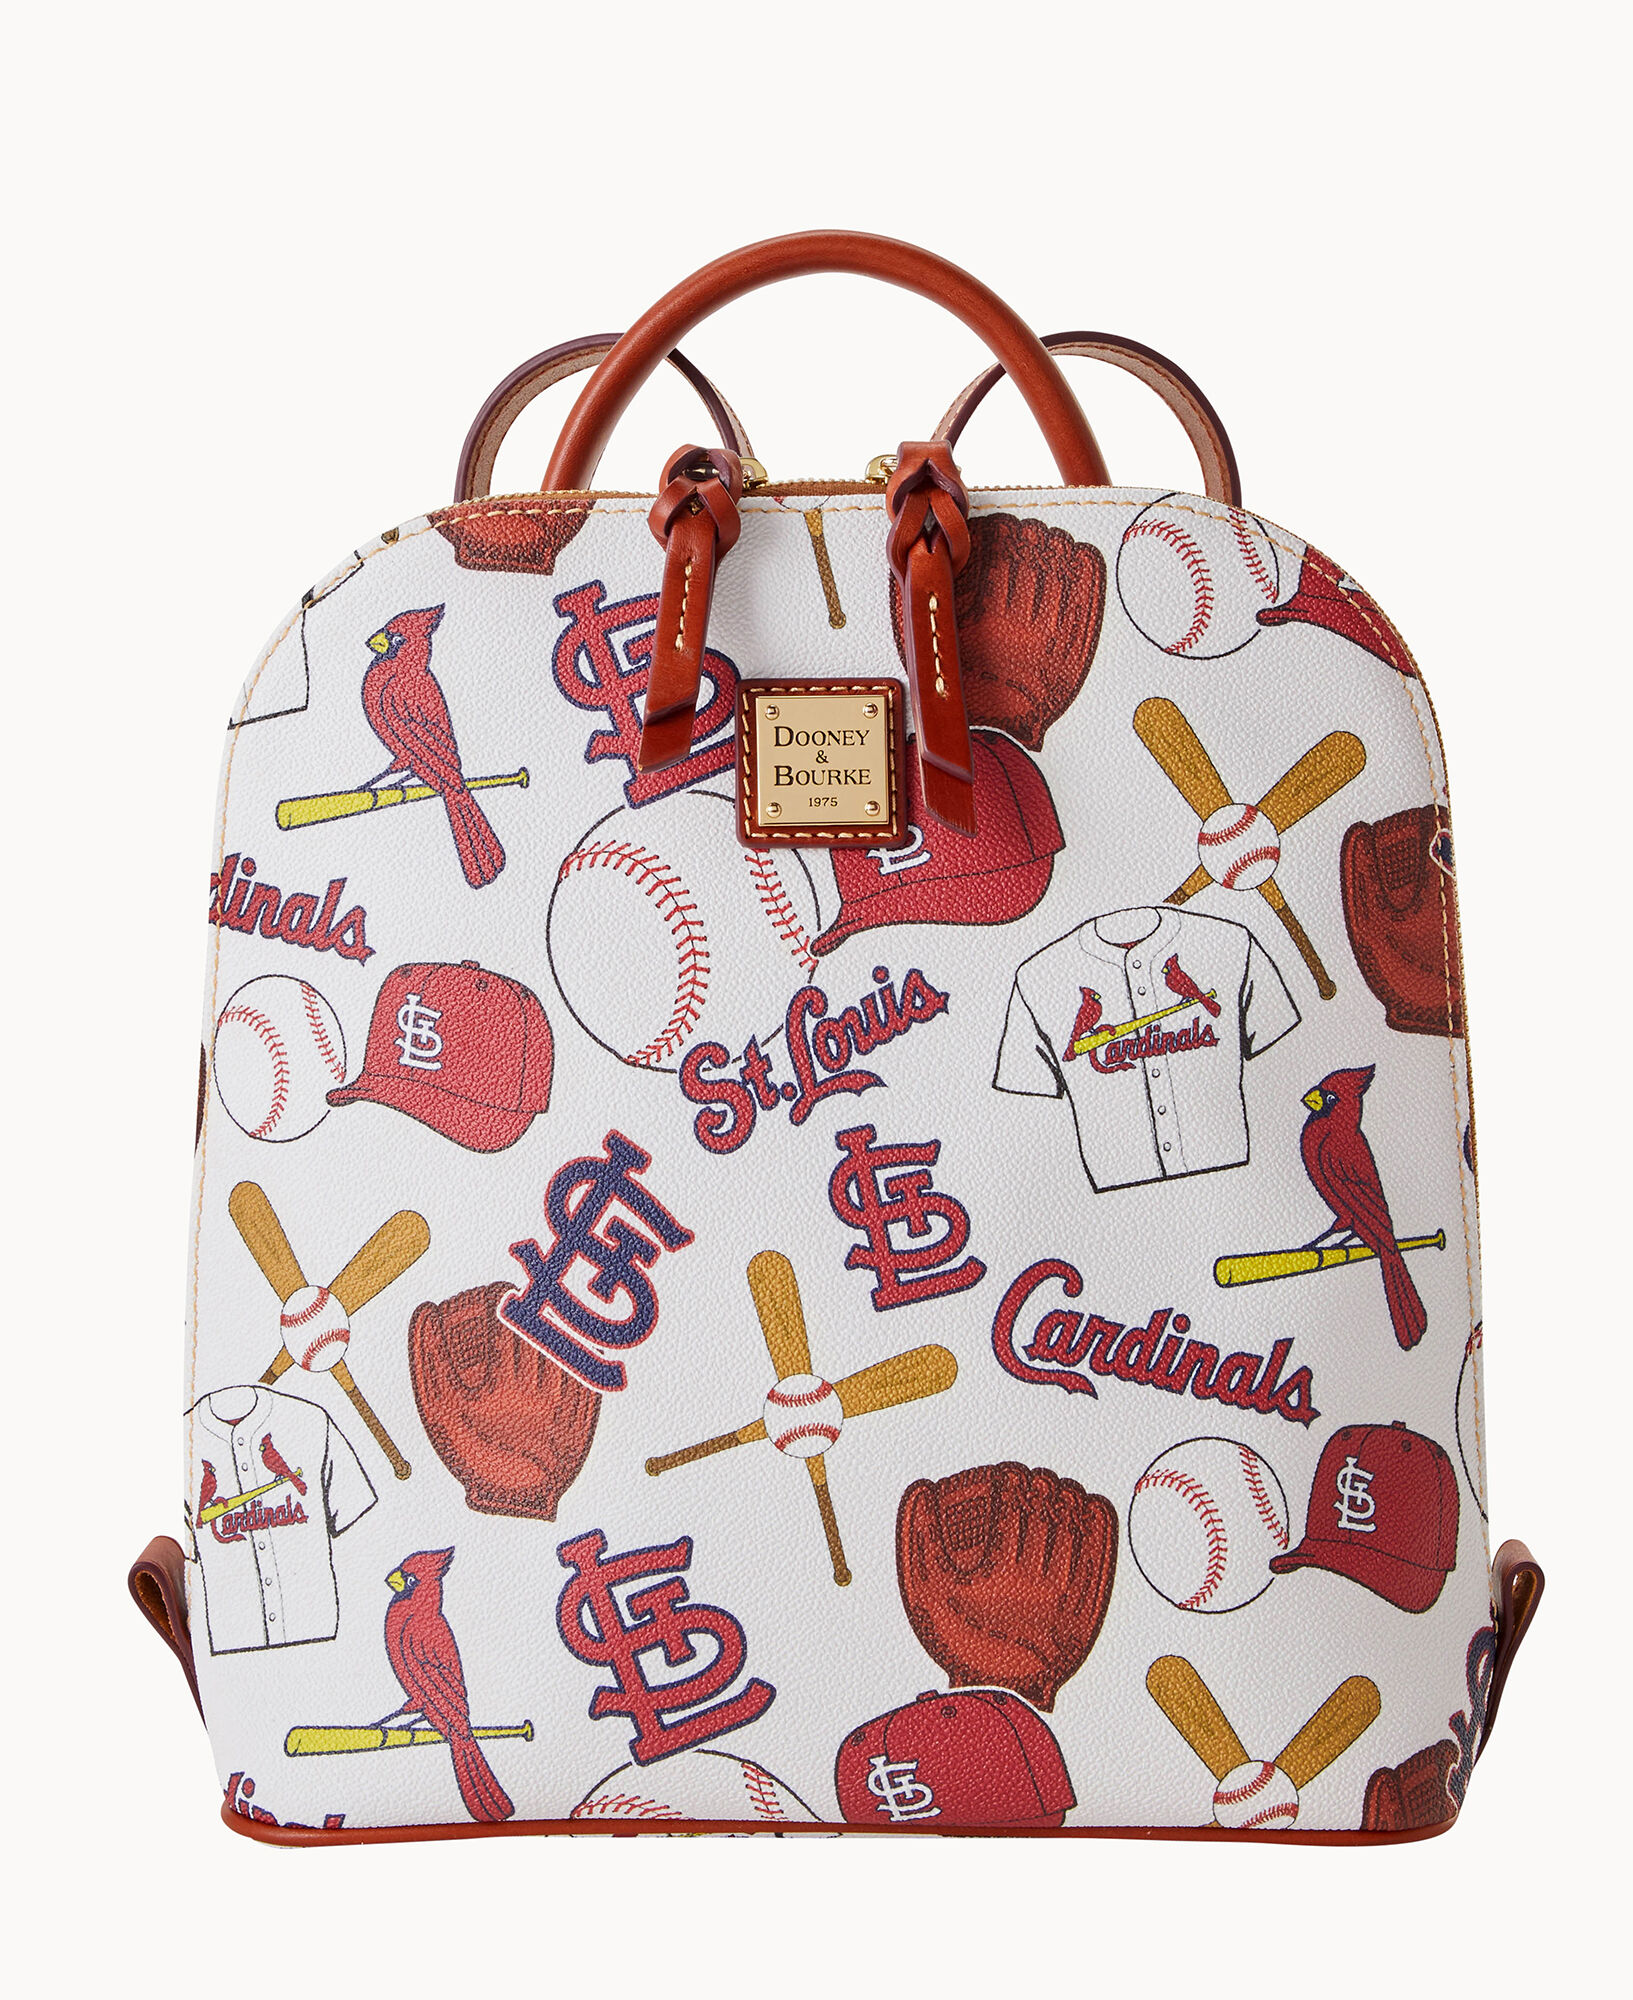 St. Louis Cardinals Backpacks - Echo Bungi Style - $15.00 Each - Backpacks/ Bags